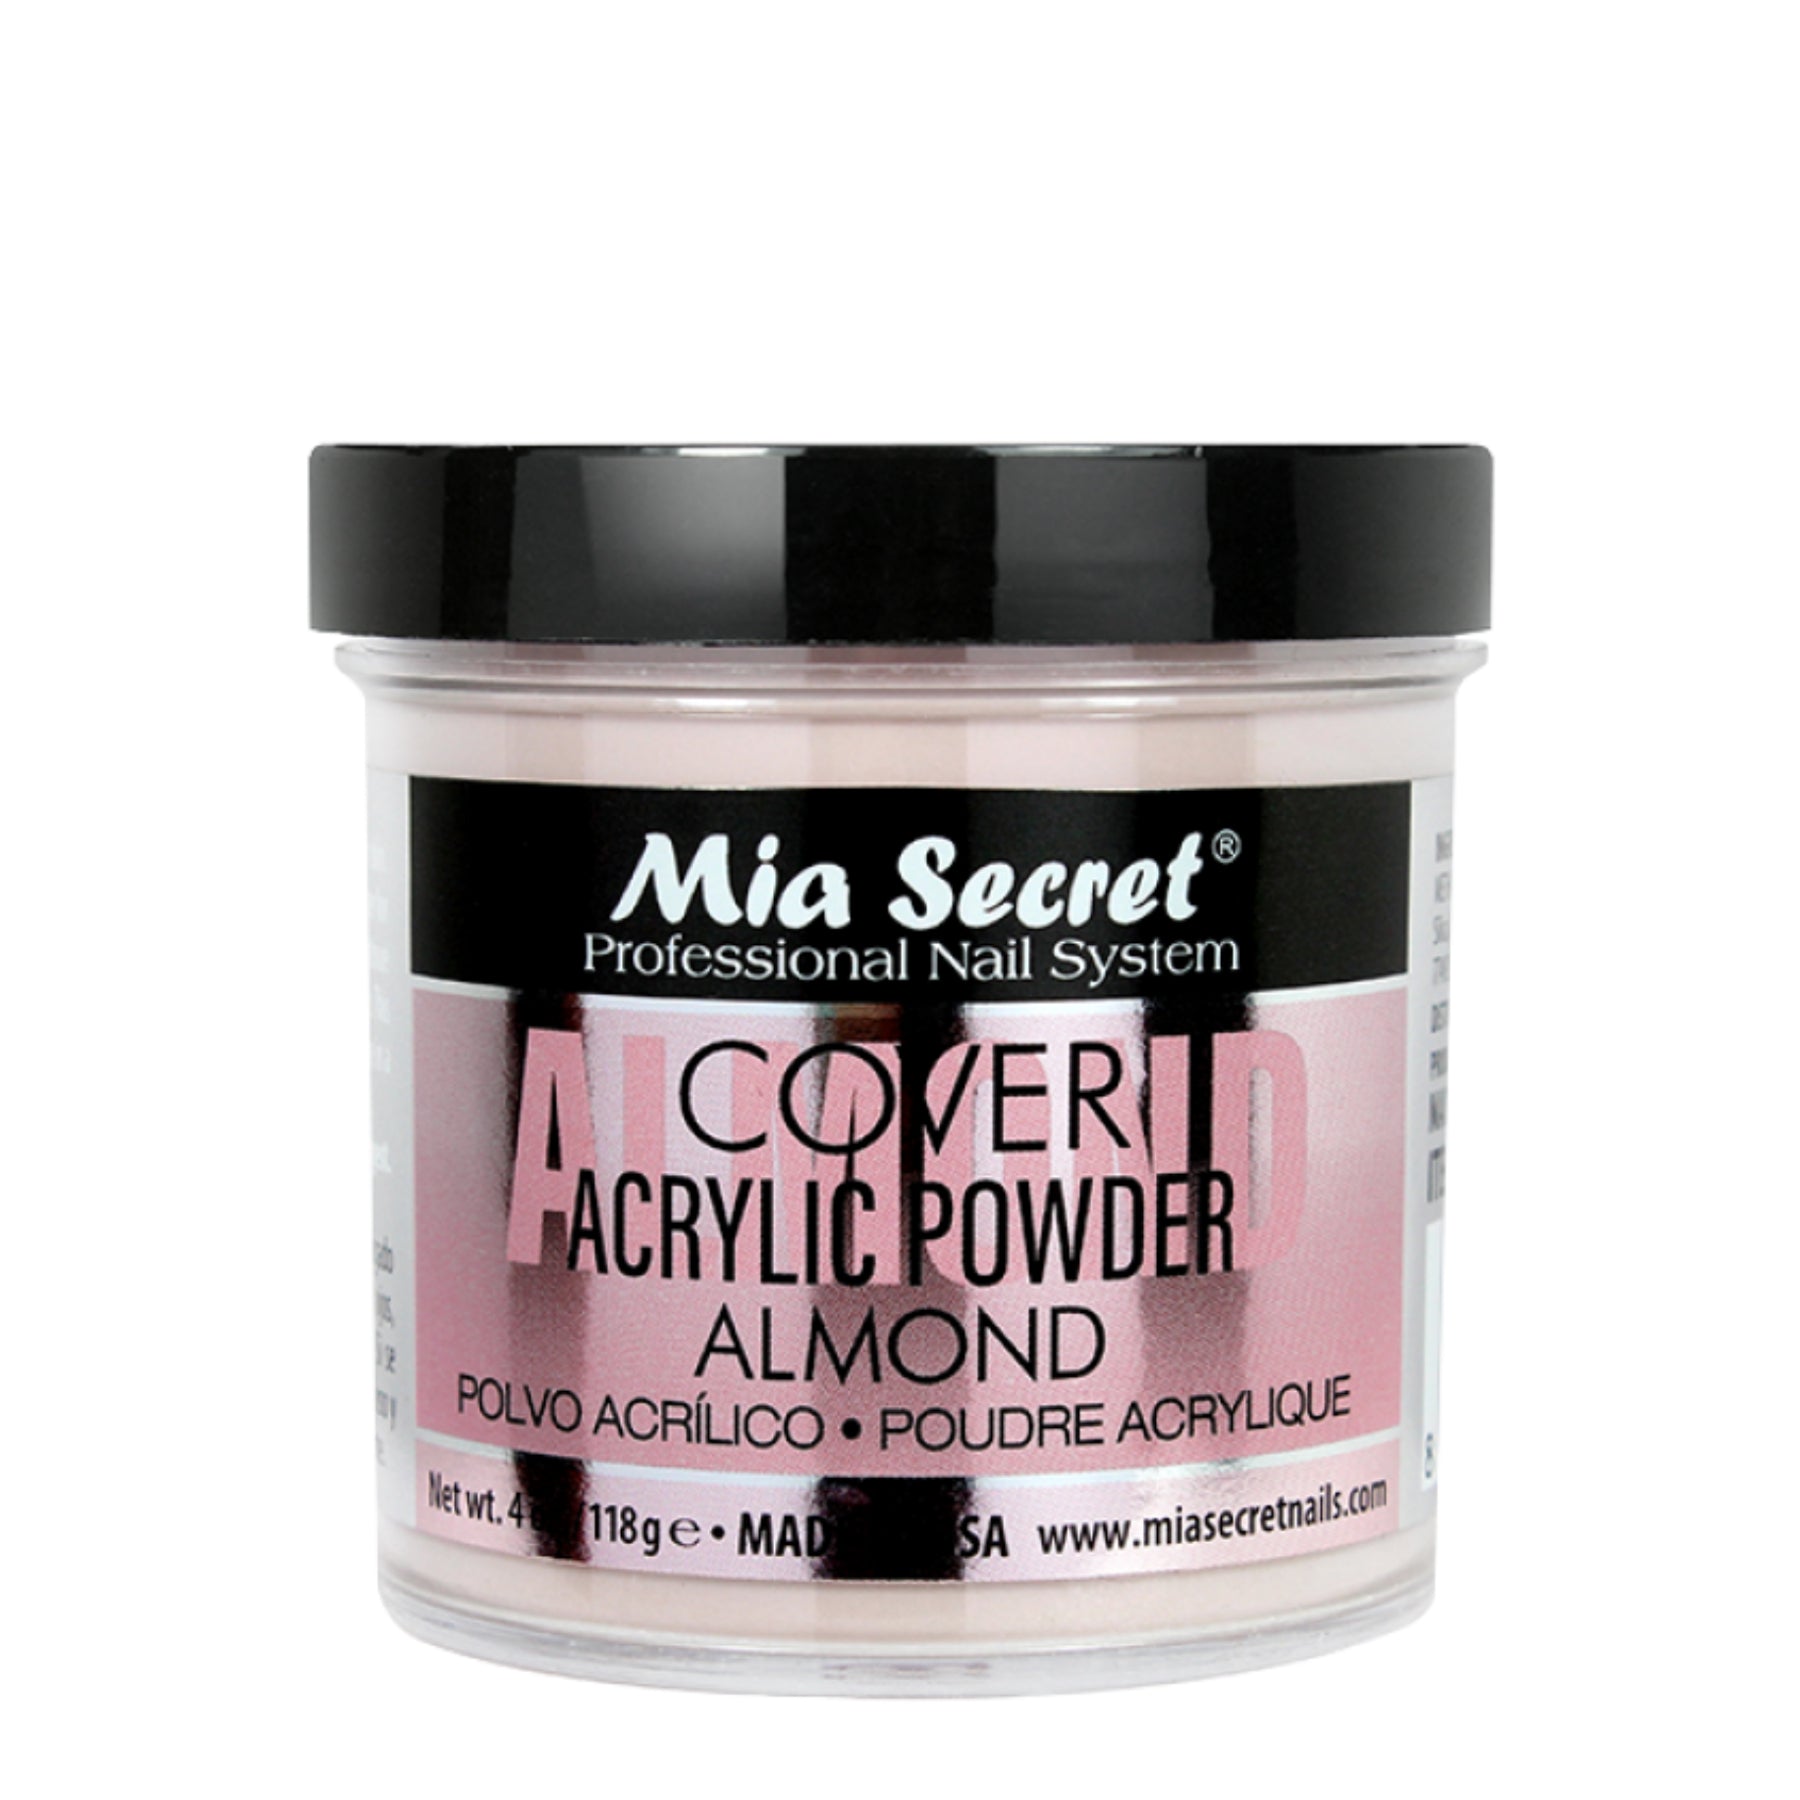 Mia Secret Acrylic Powder - Cover Almond